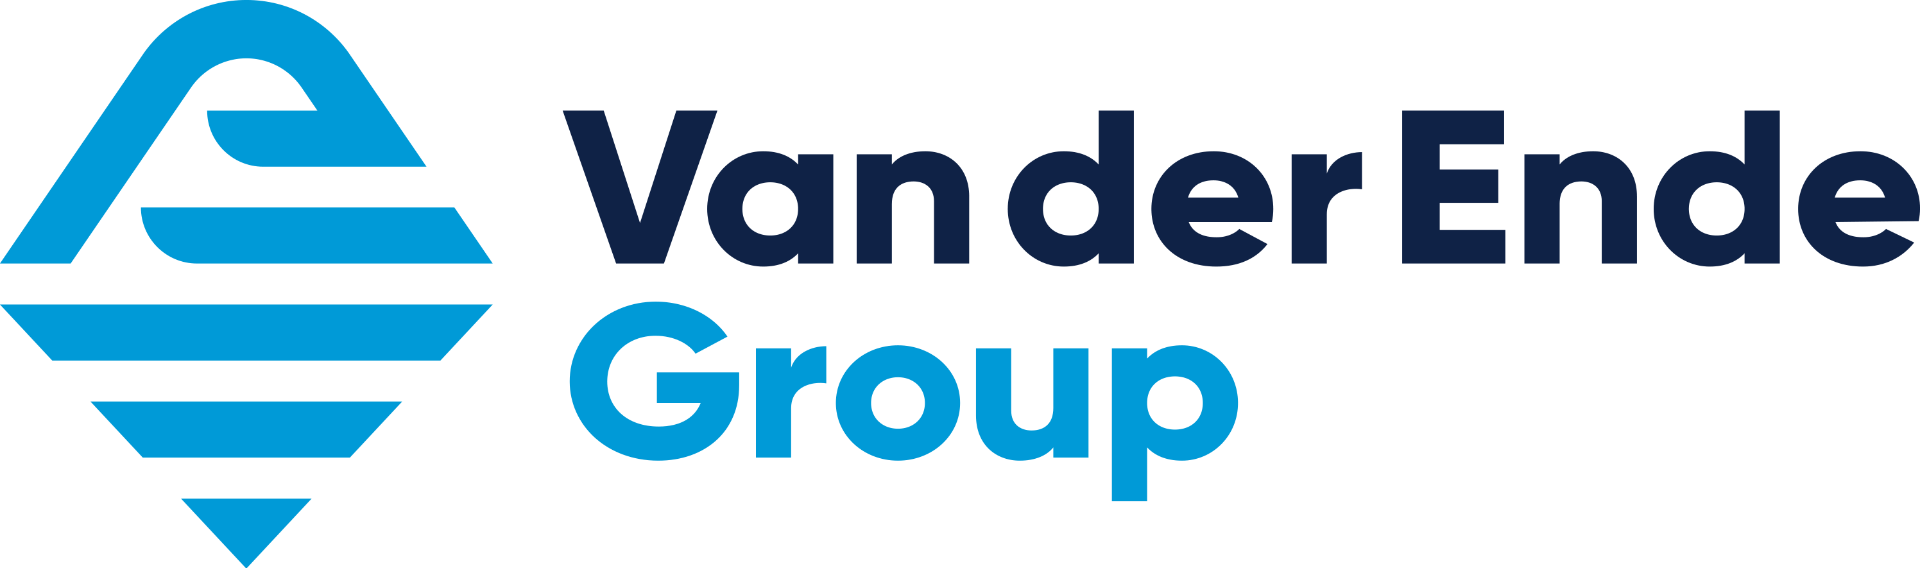 Van der Ende Group